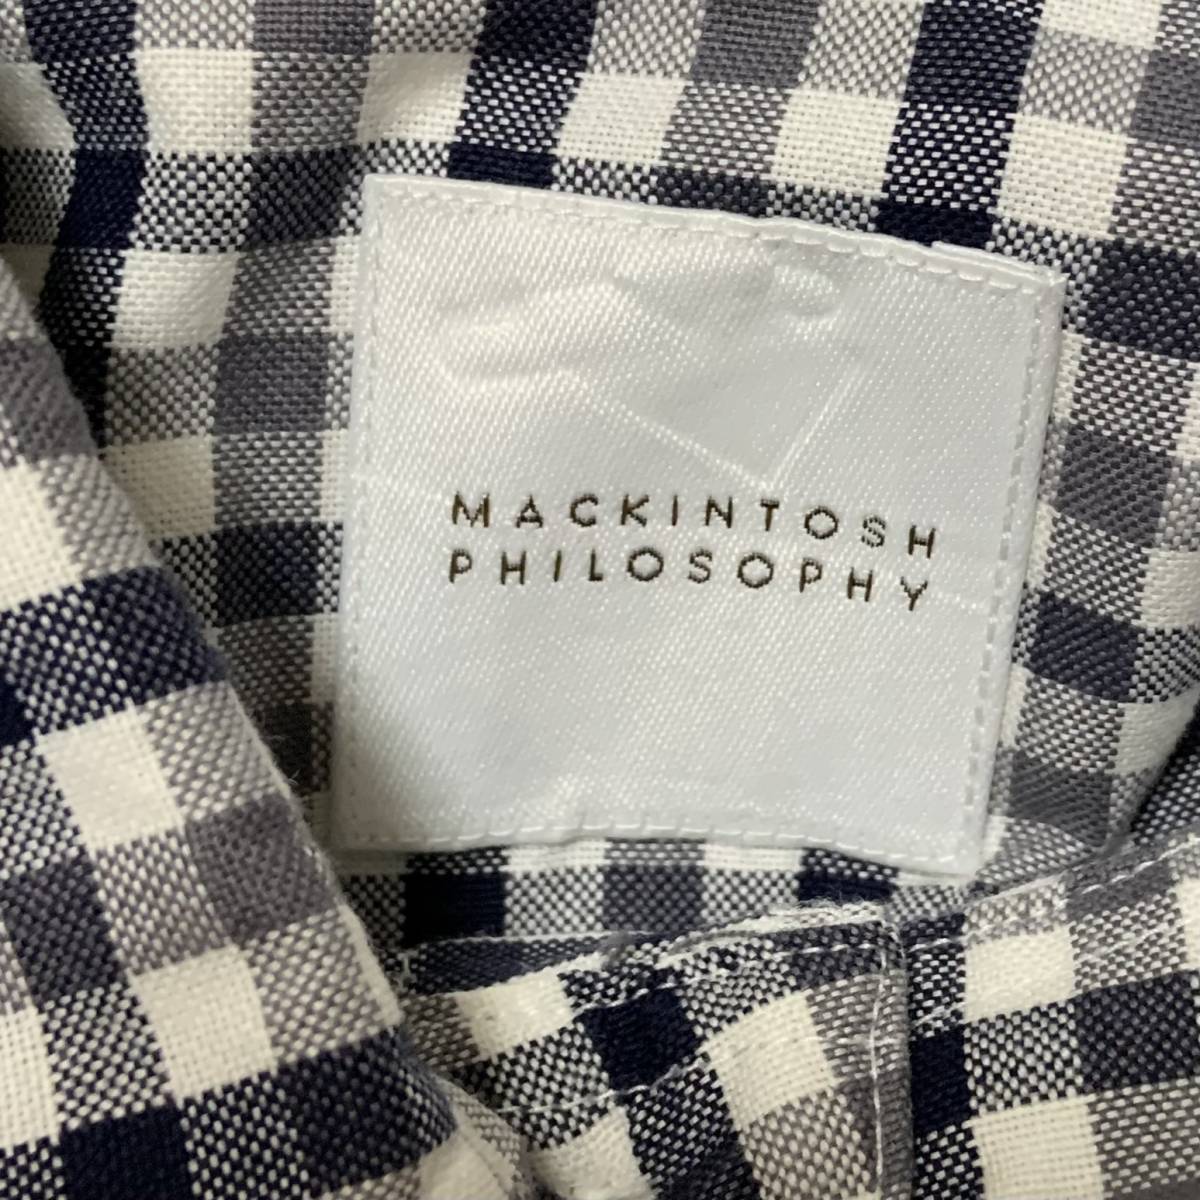 MACKINTOSH PHILOSOPHY! рубашка с длинным рукавом! кнопка down!. карман! проверка! Macintosh! SIZE 38